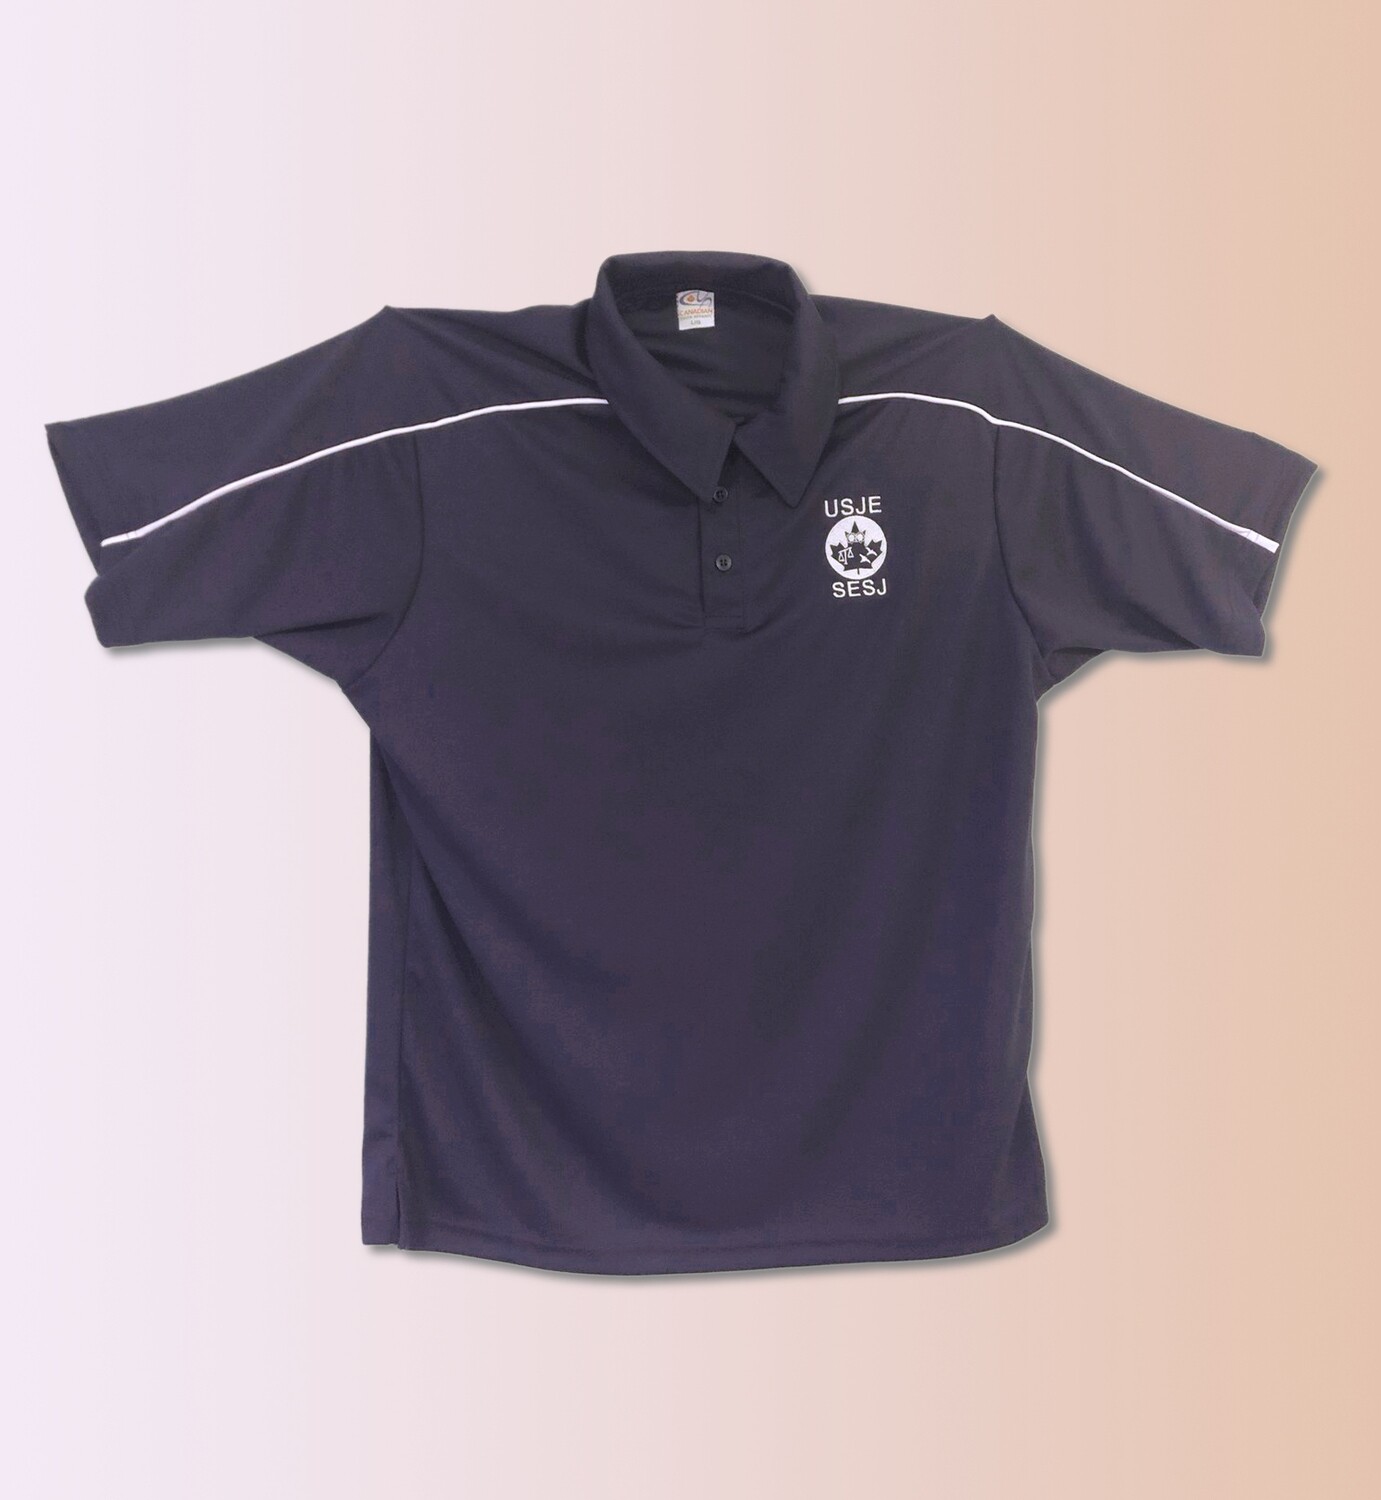 USJE Performance Piqué Polo Shirt (Navy) (Ladies) / Polo performance en piqué du SESJ (Bleu Marin) (Femme)